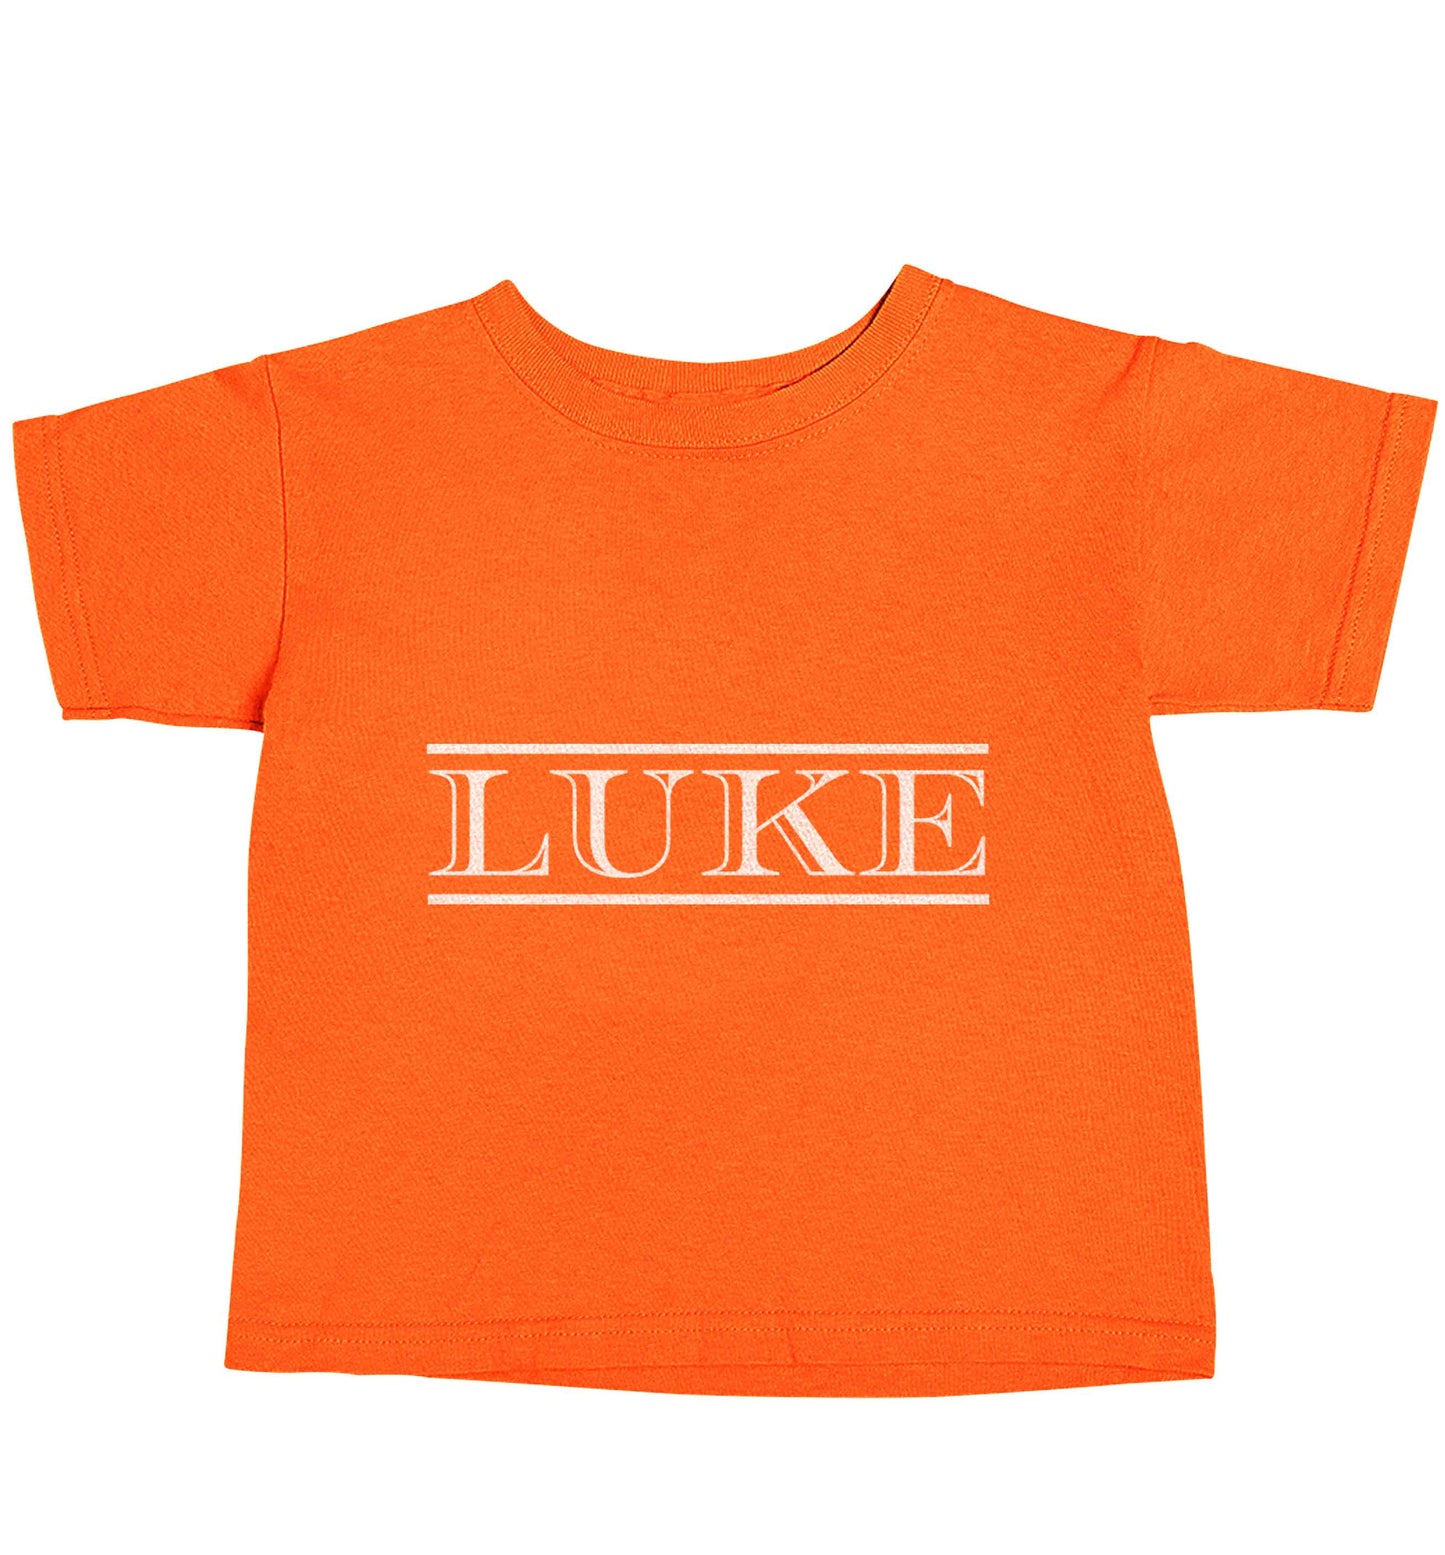 Personalised name orange baby toddler Tshirt 2 Years